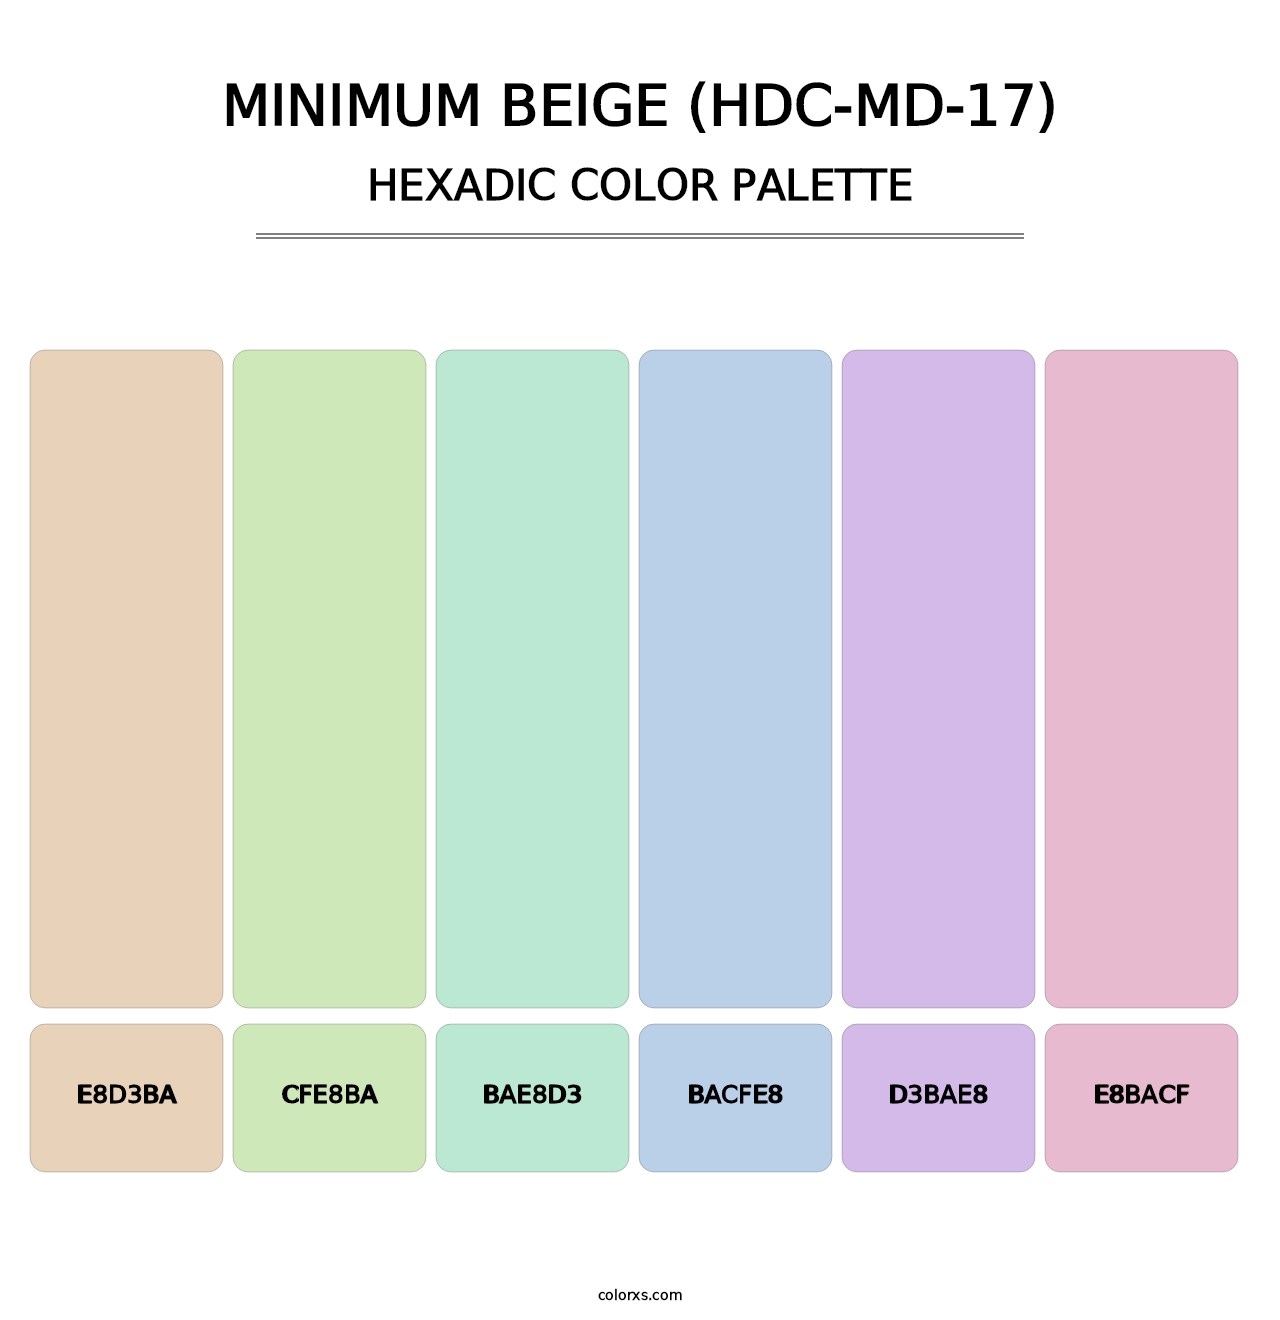 Minimum Beige (HDC-MD-17) - Hexadic Color Palette